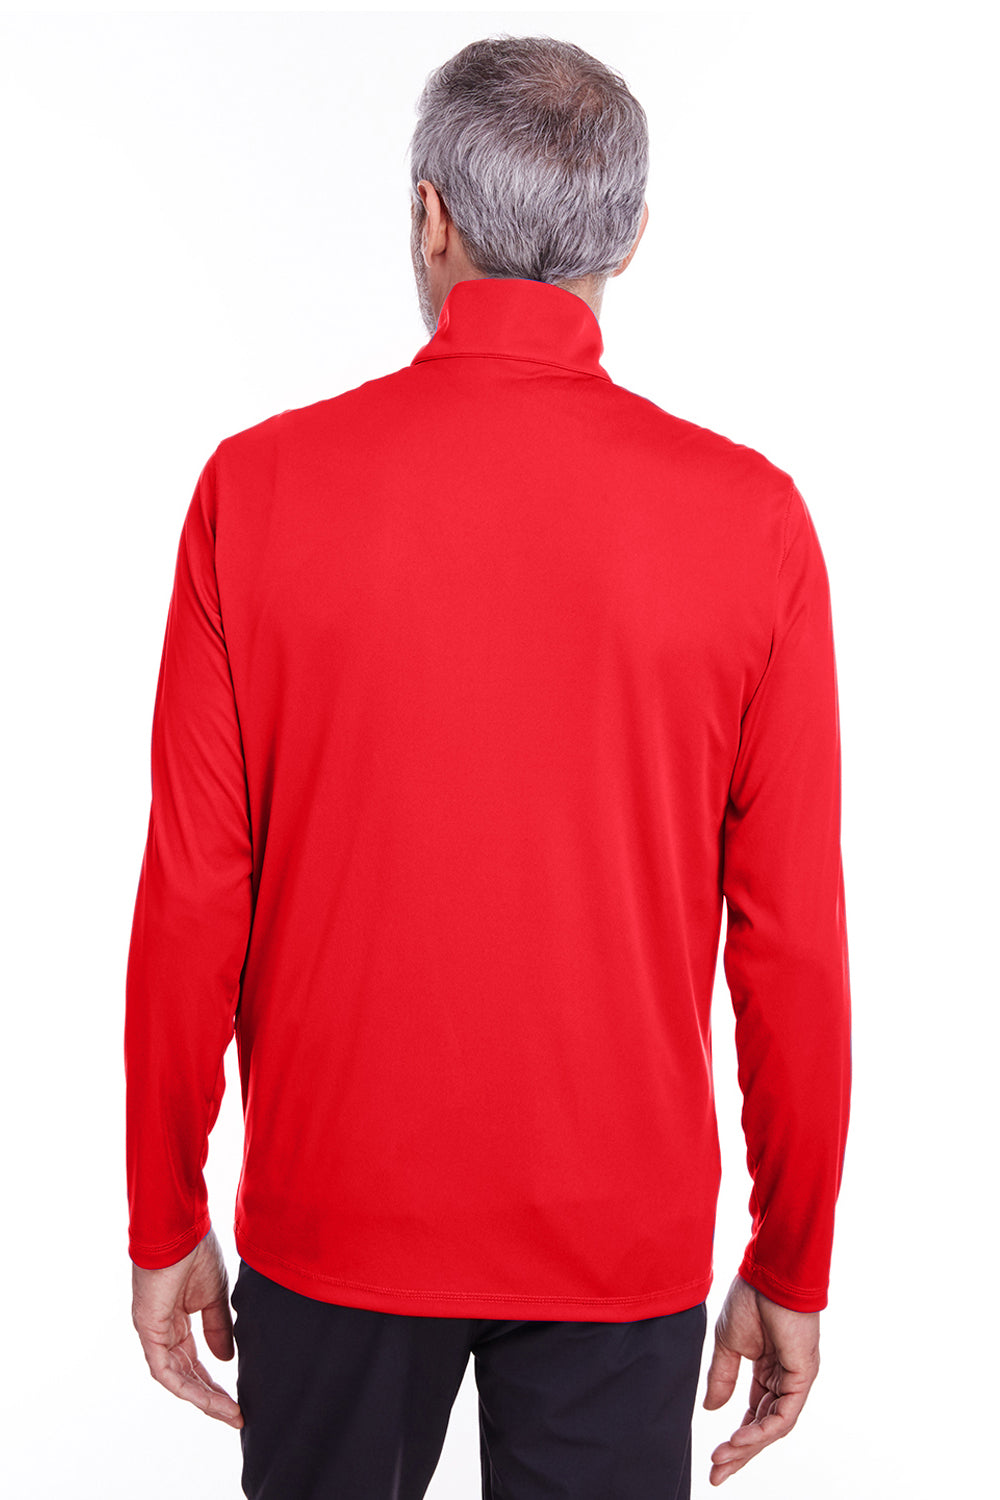 Puma 596807 Mens Icon Performance Moisture Wicking 1/4 Zip Sweatshirt Red Back